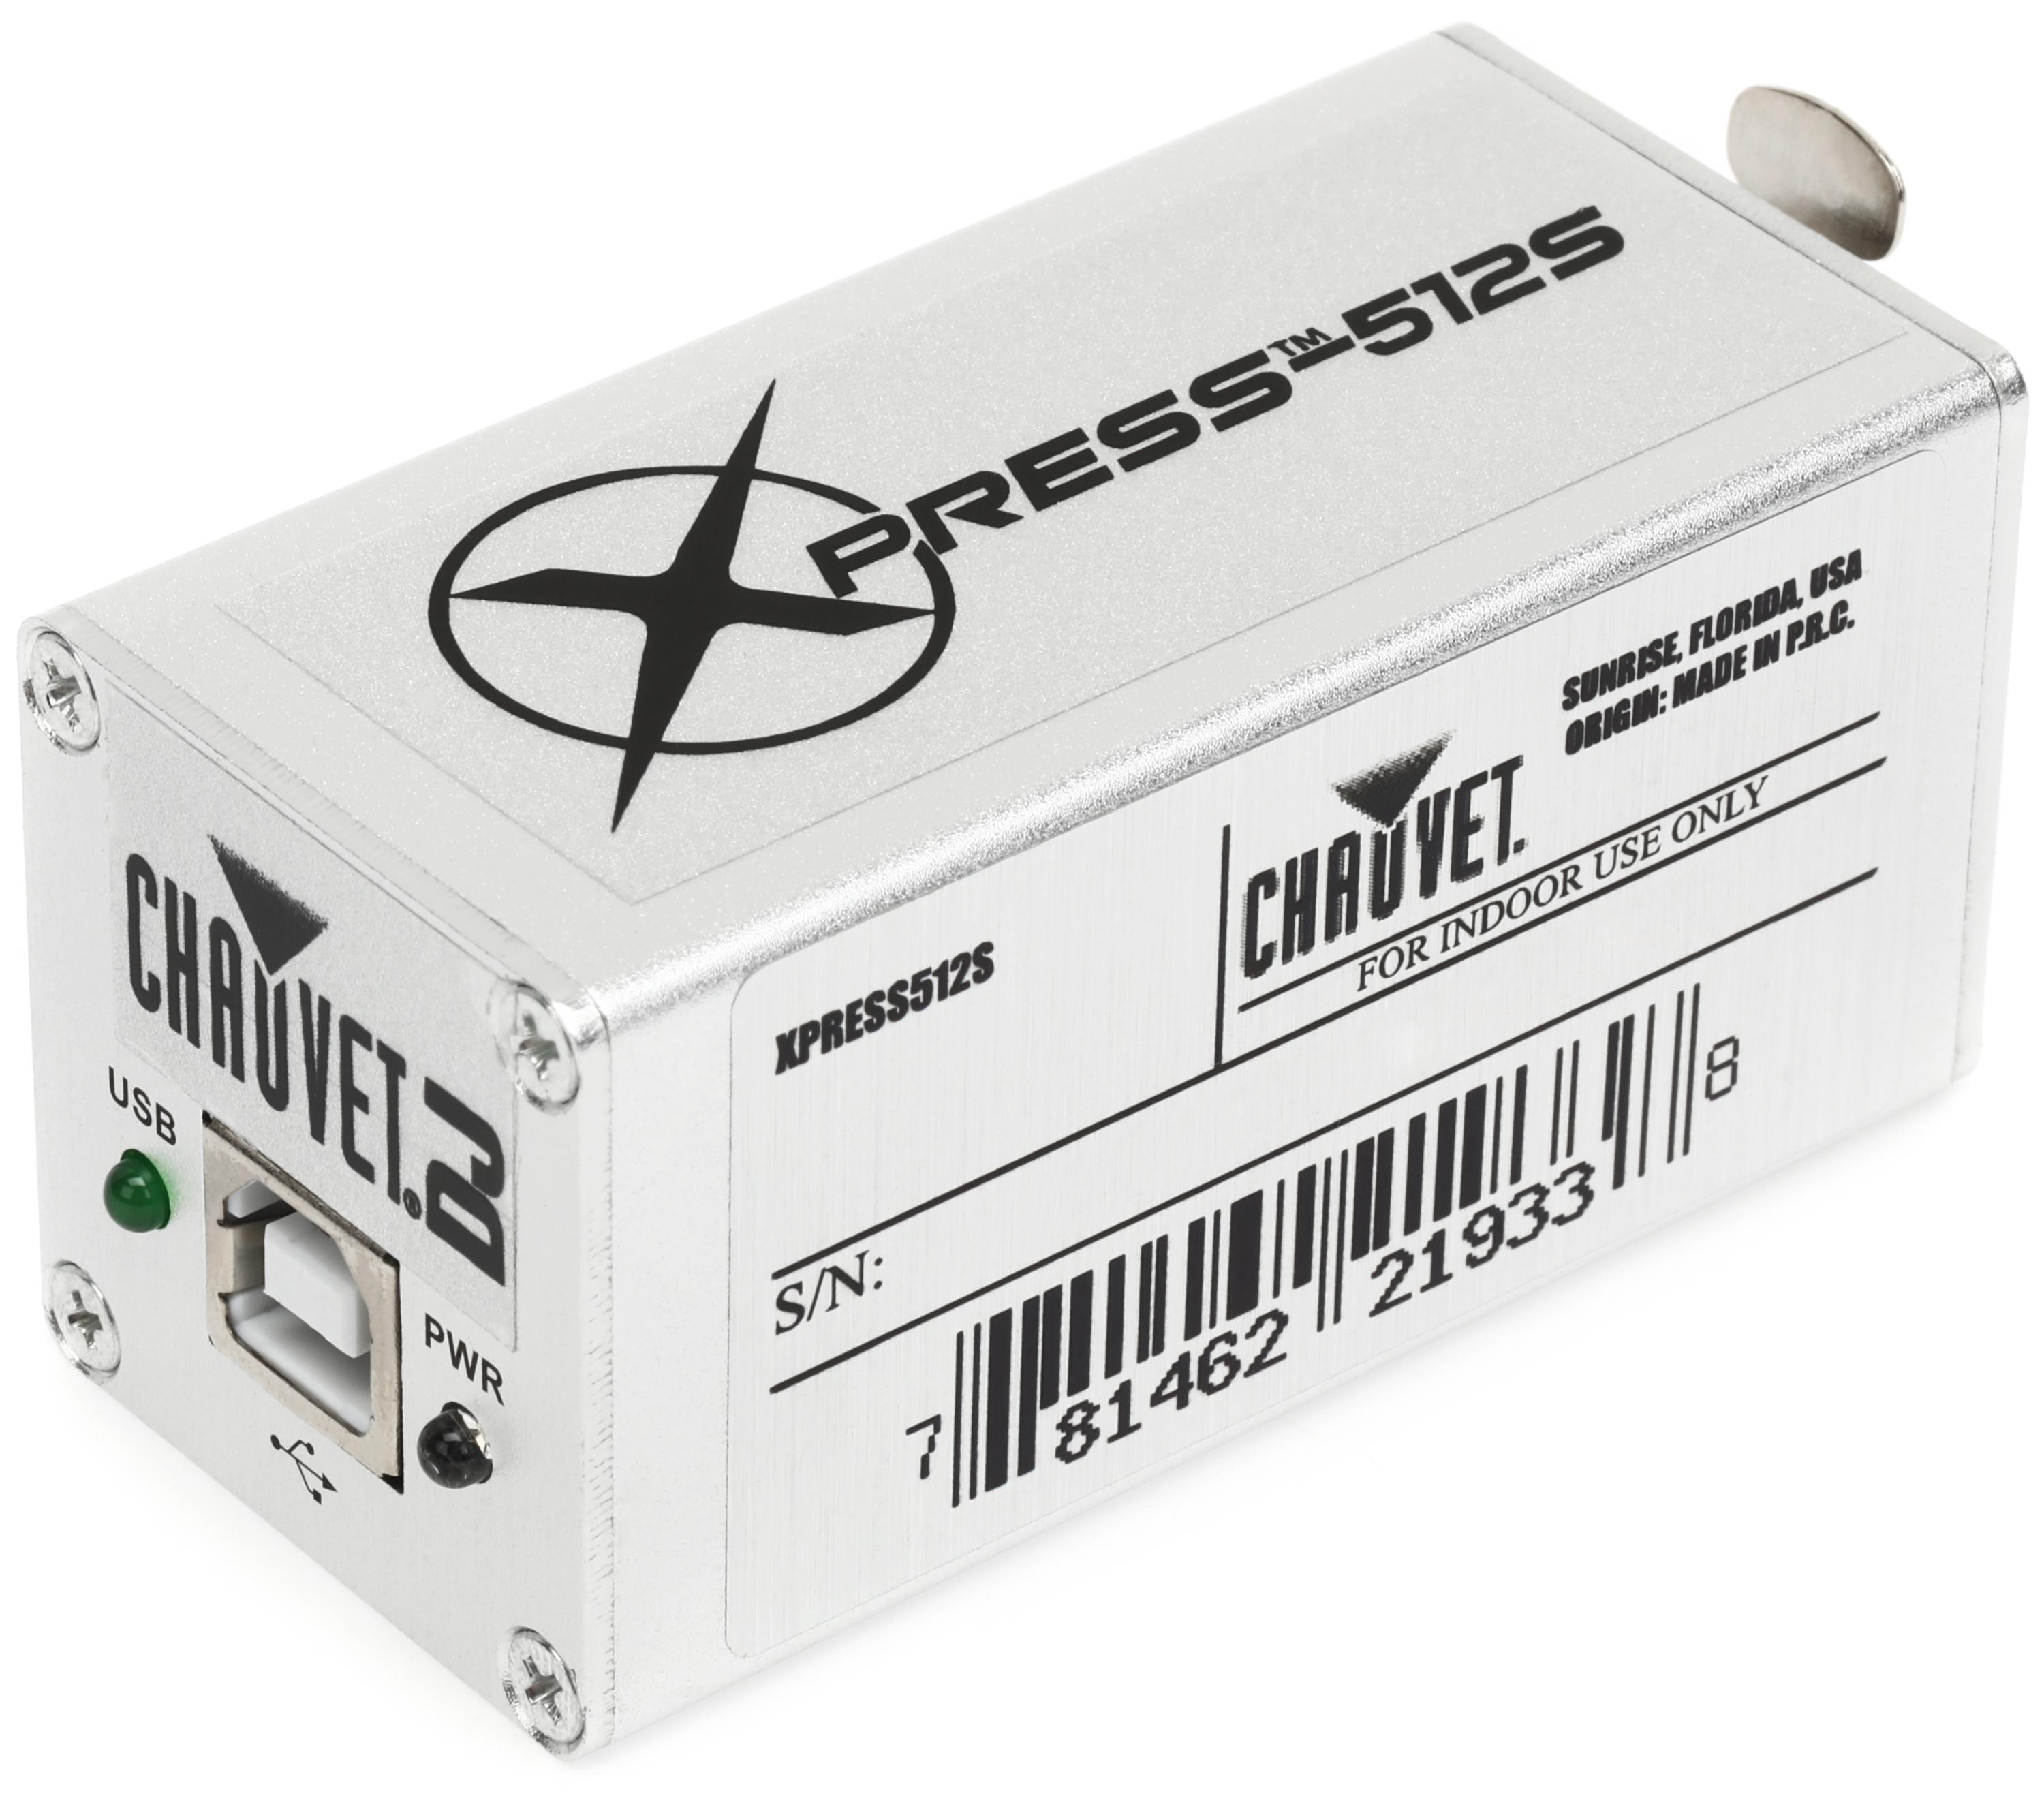 Chauvet Xpress 512S DMX USB Interface & Software